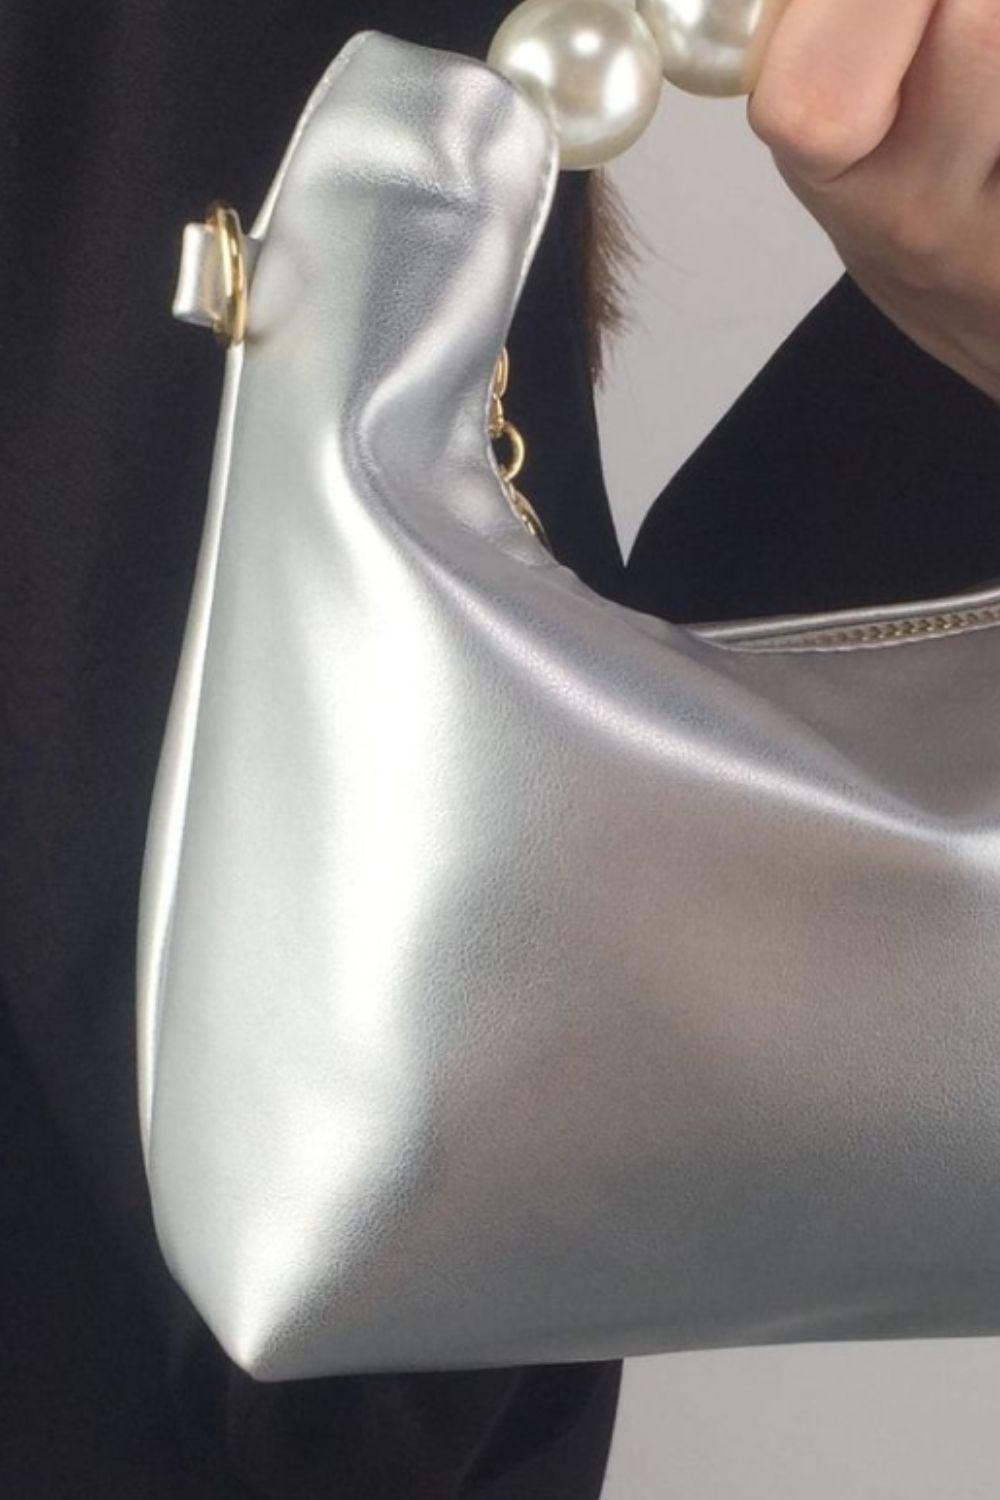 Adored PU Leather Pearl Handbag - Closet of Ren